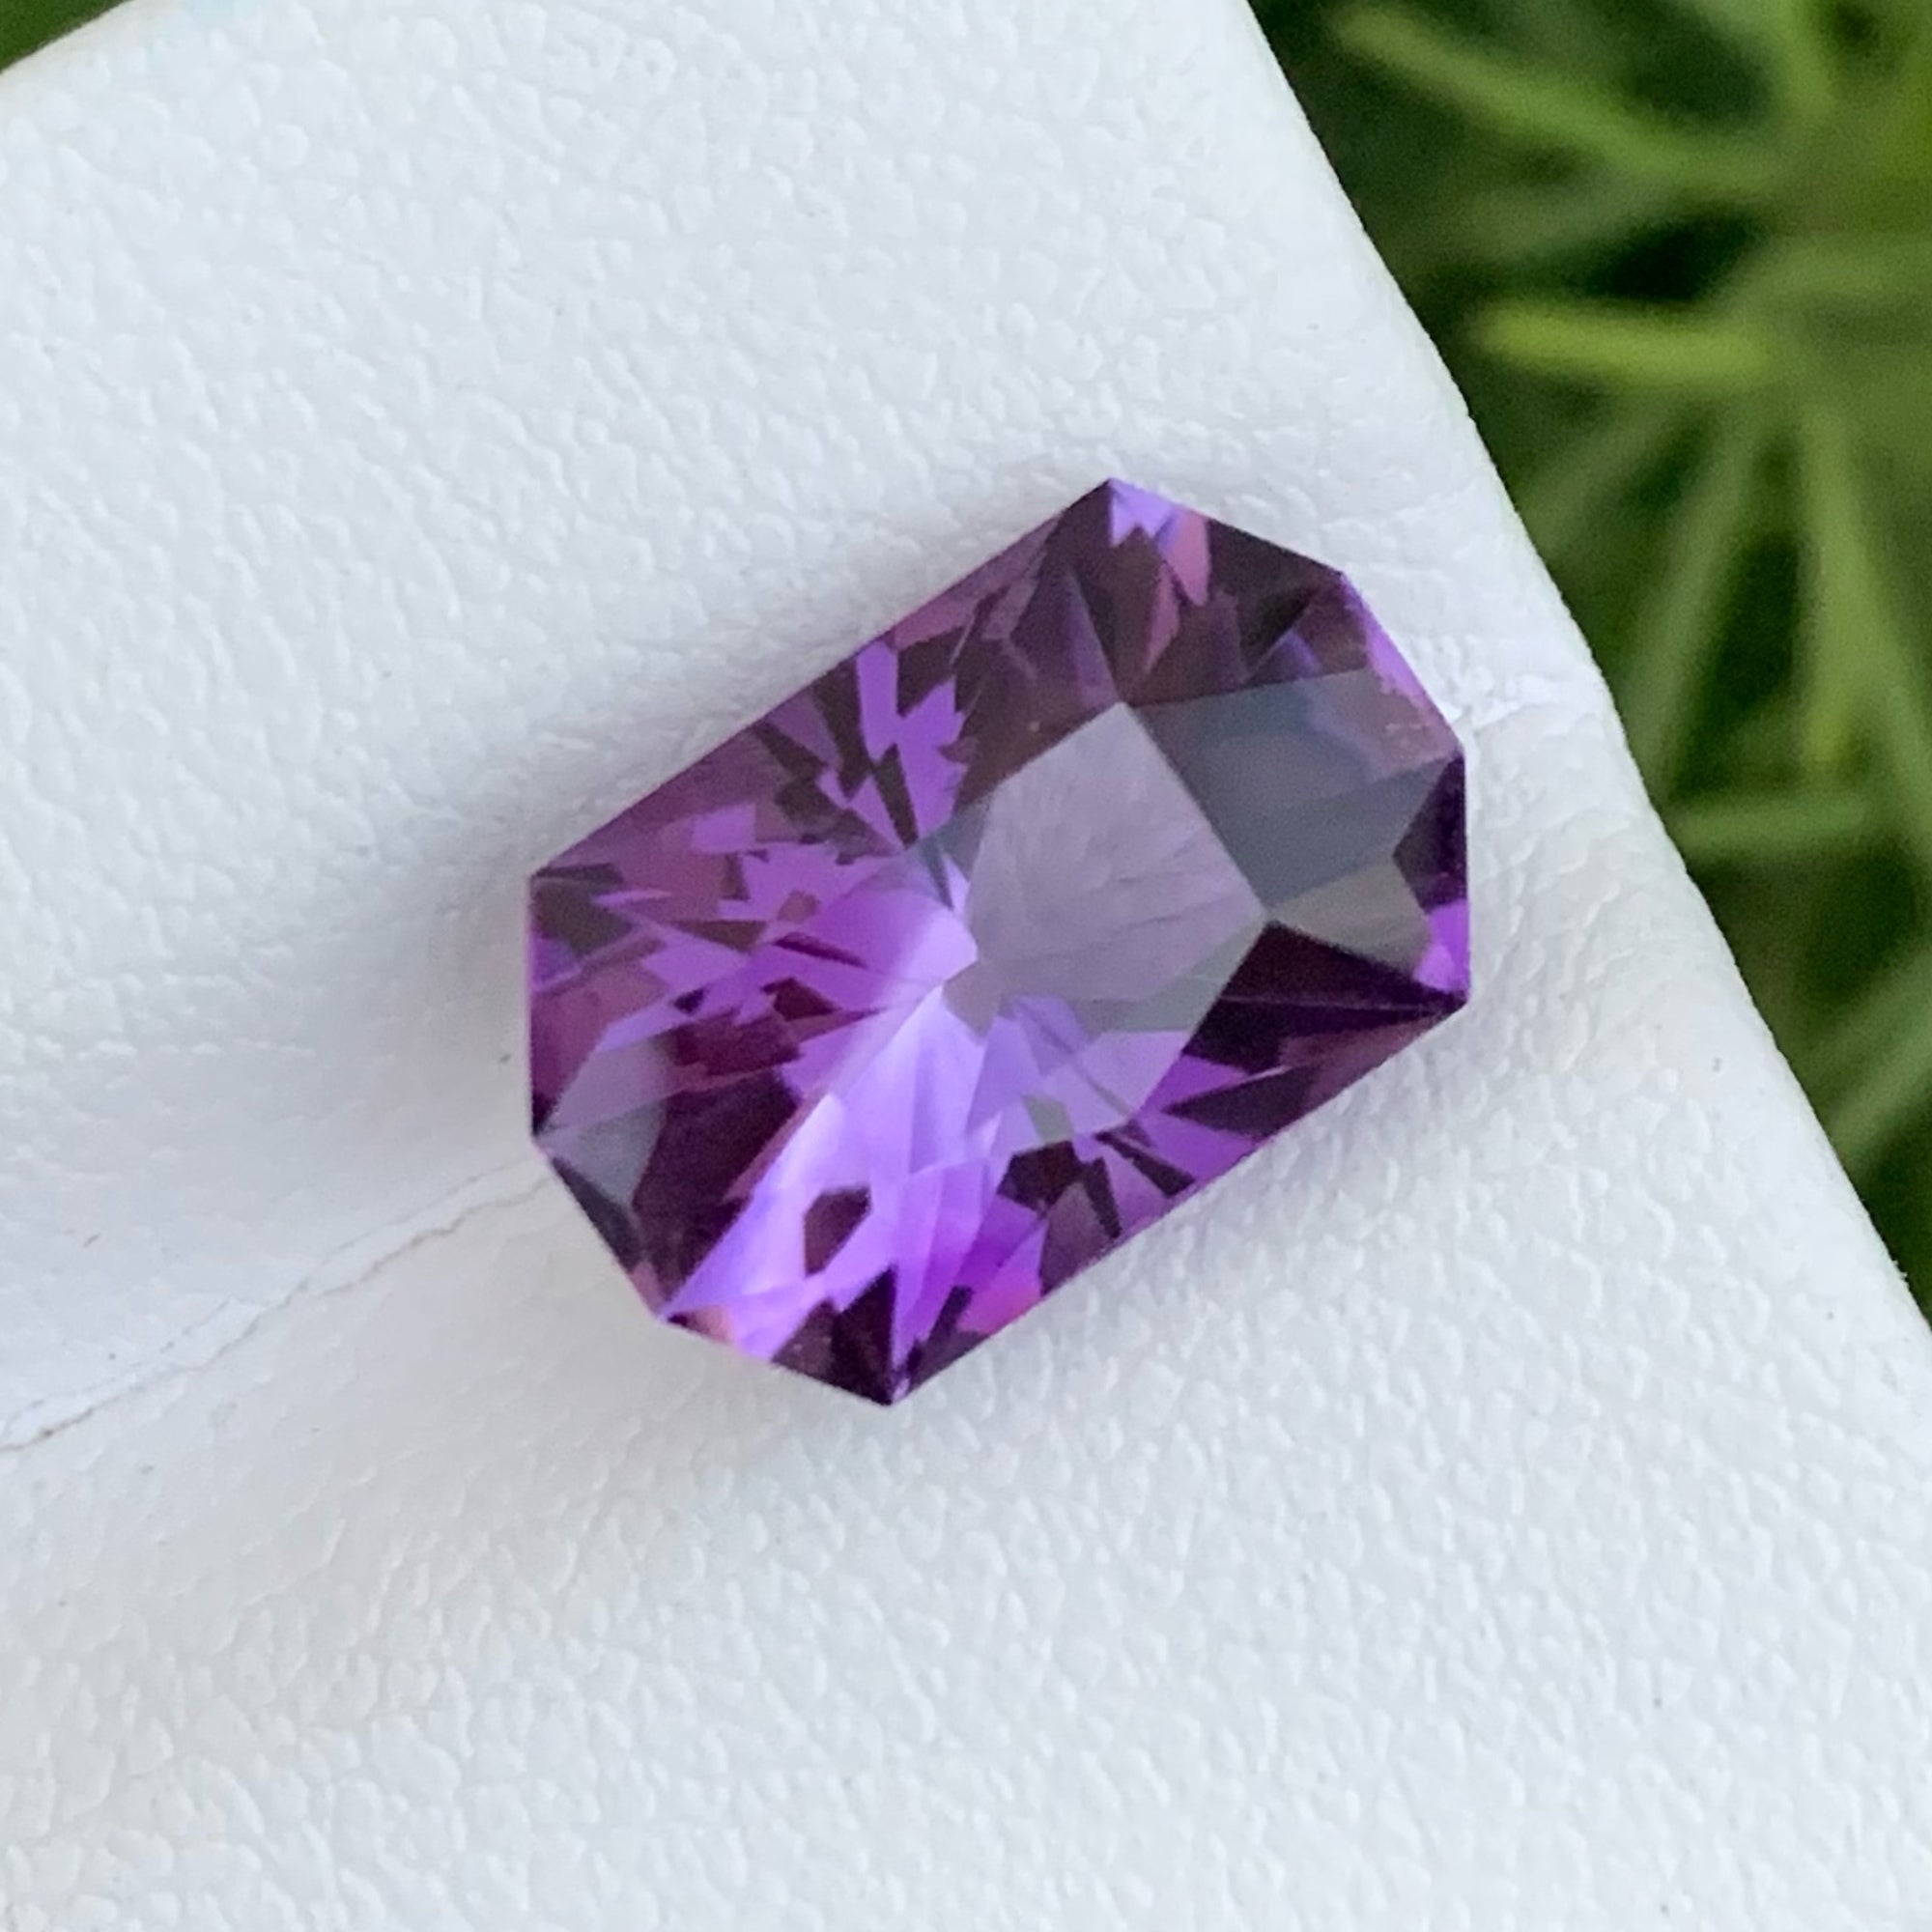 Exquisite Fancy Cut Loose Amethyst Gemstone